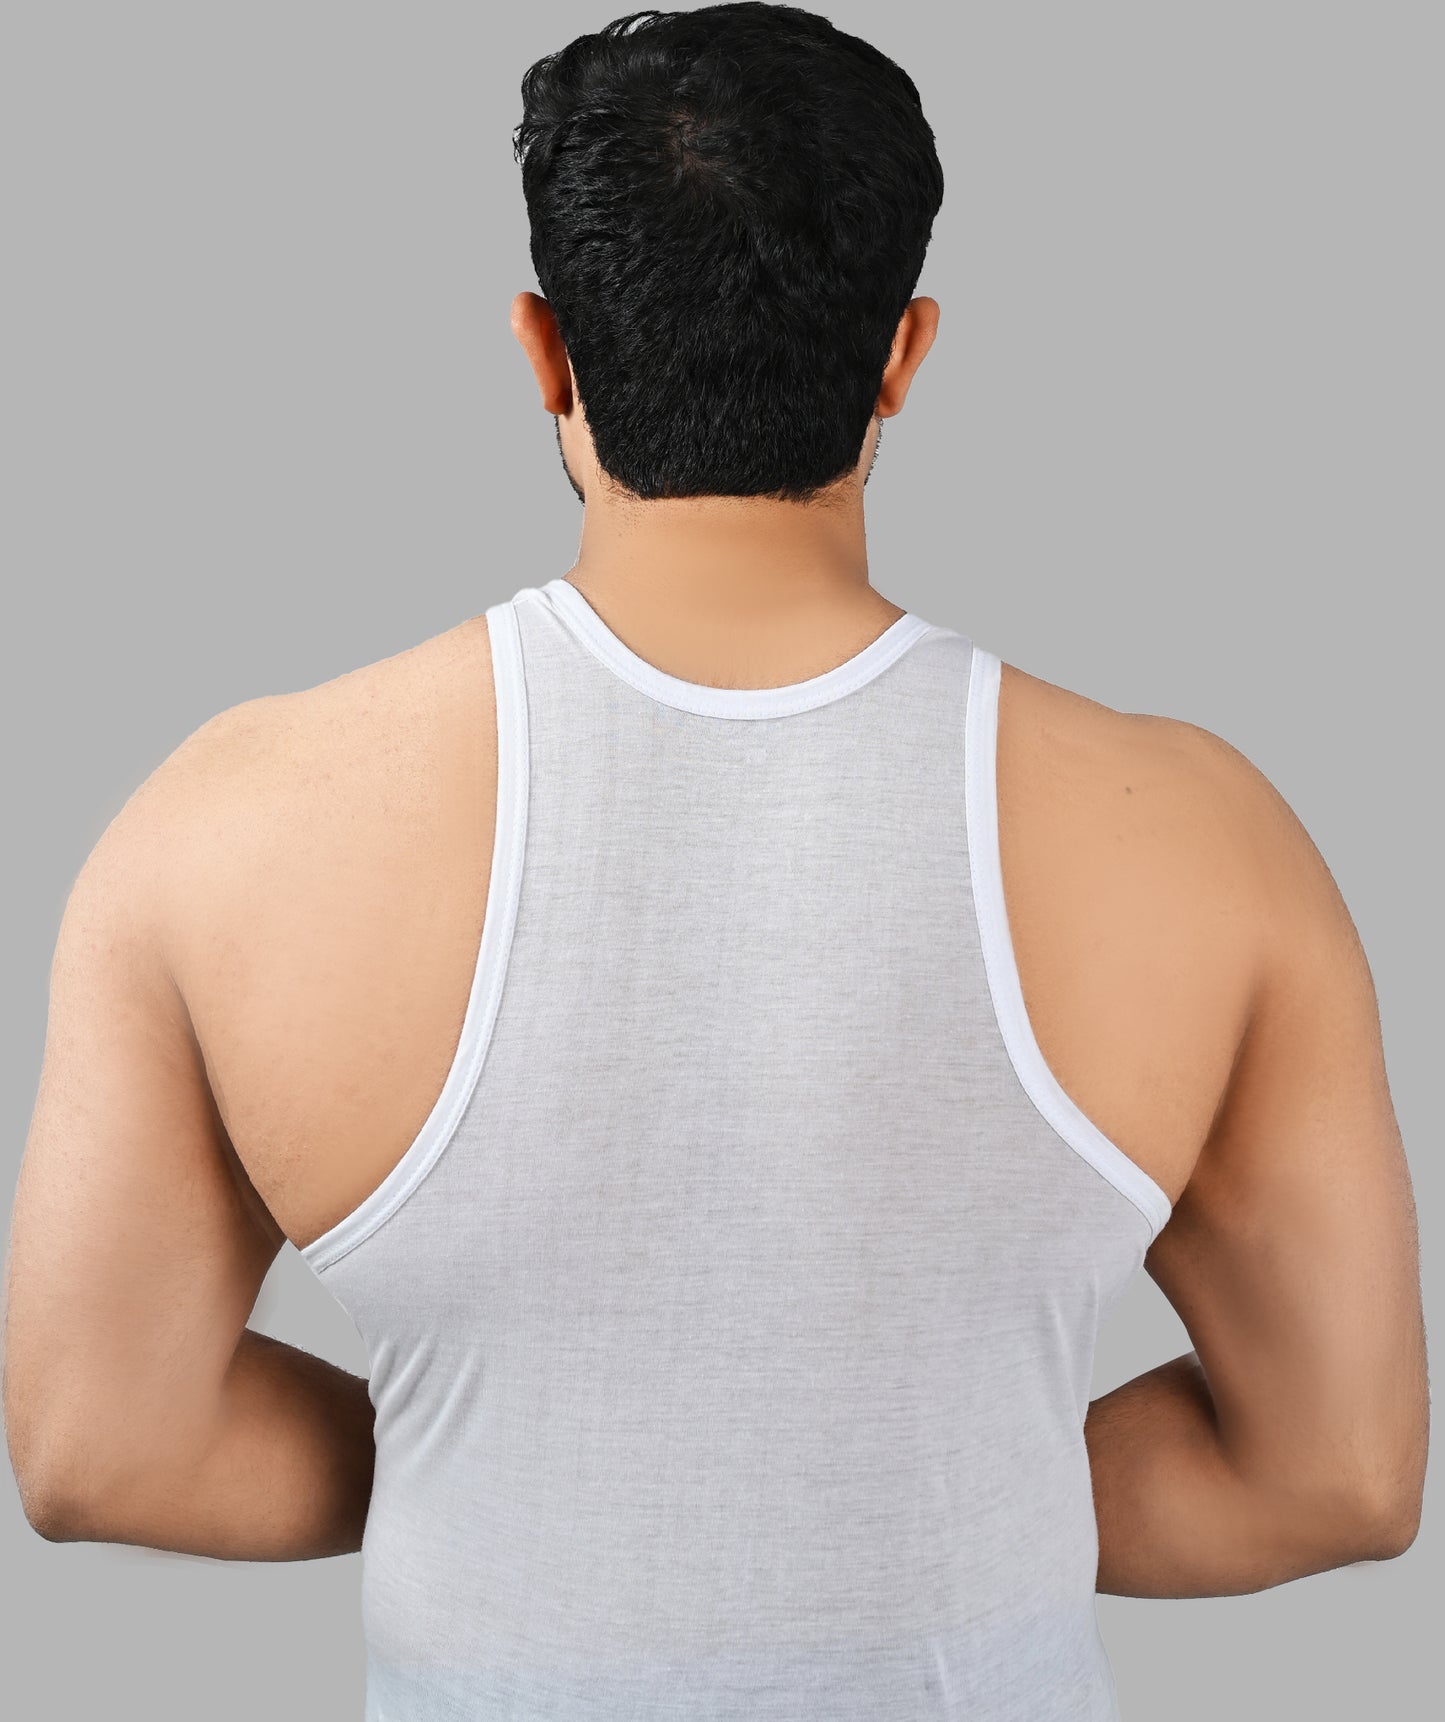 ARINO® See-Through & Thinnest Fabric Sleeveless Men’s Vest (Mukhmal)